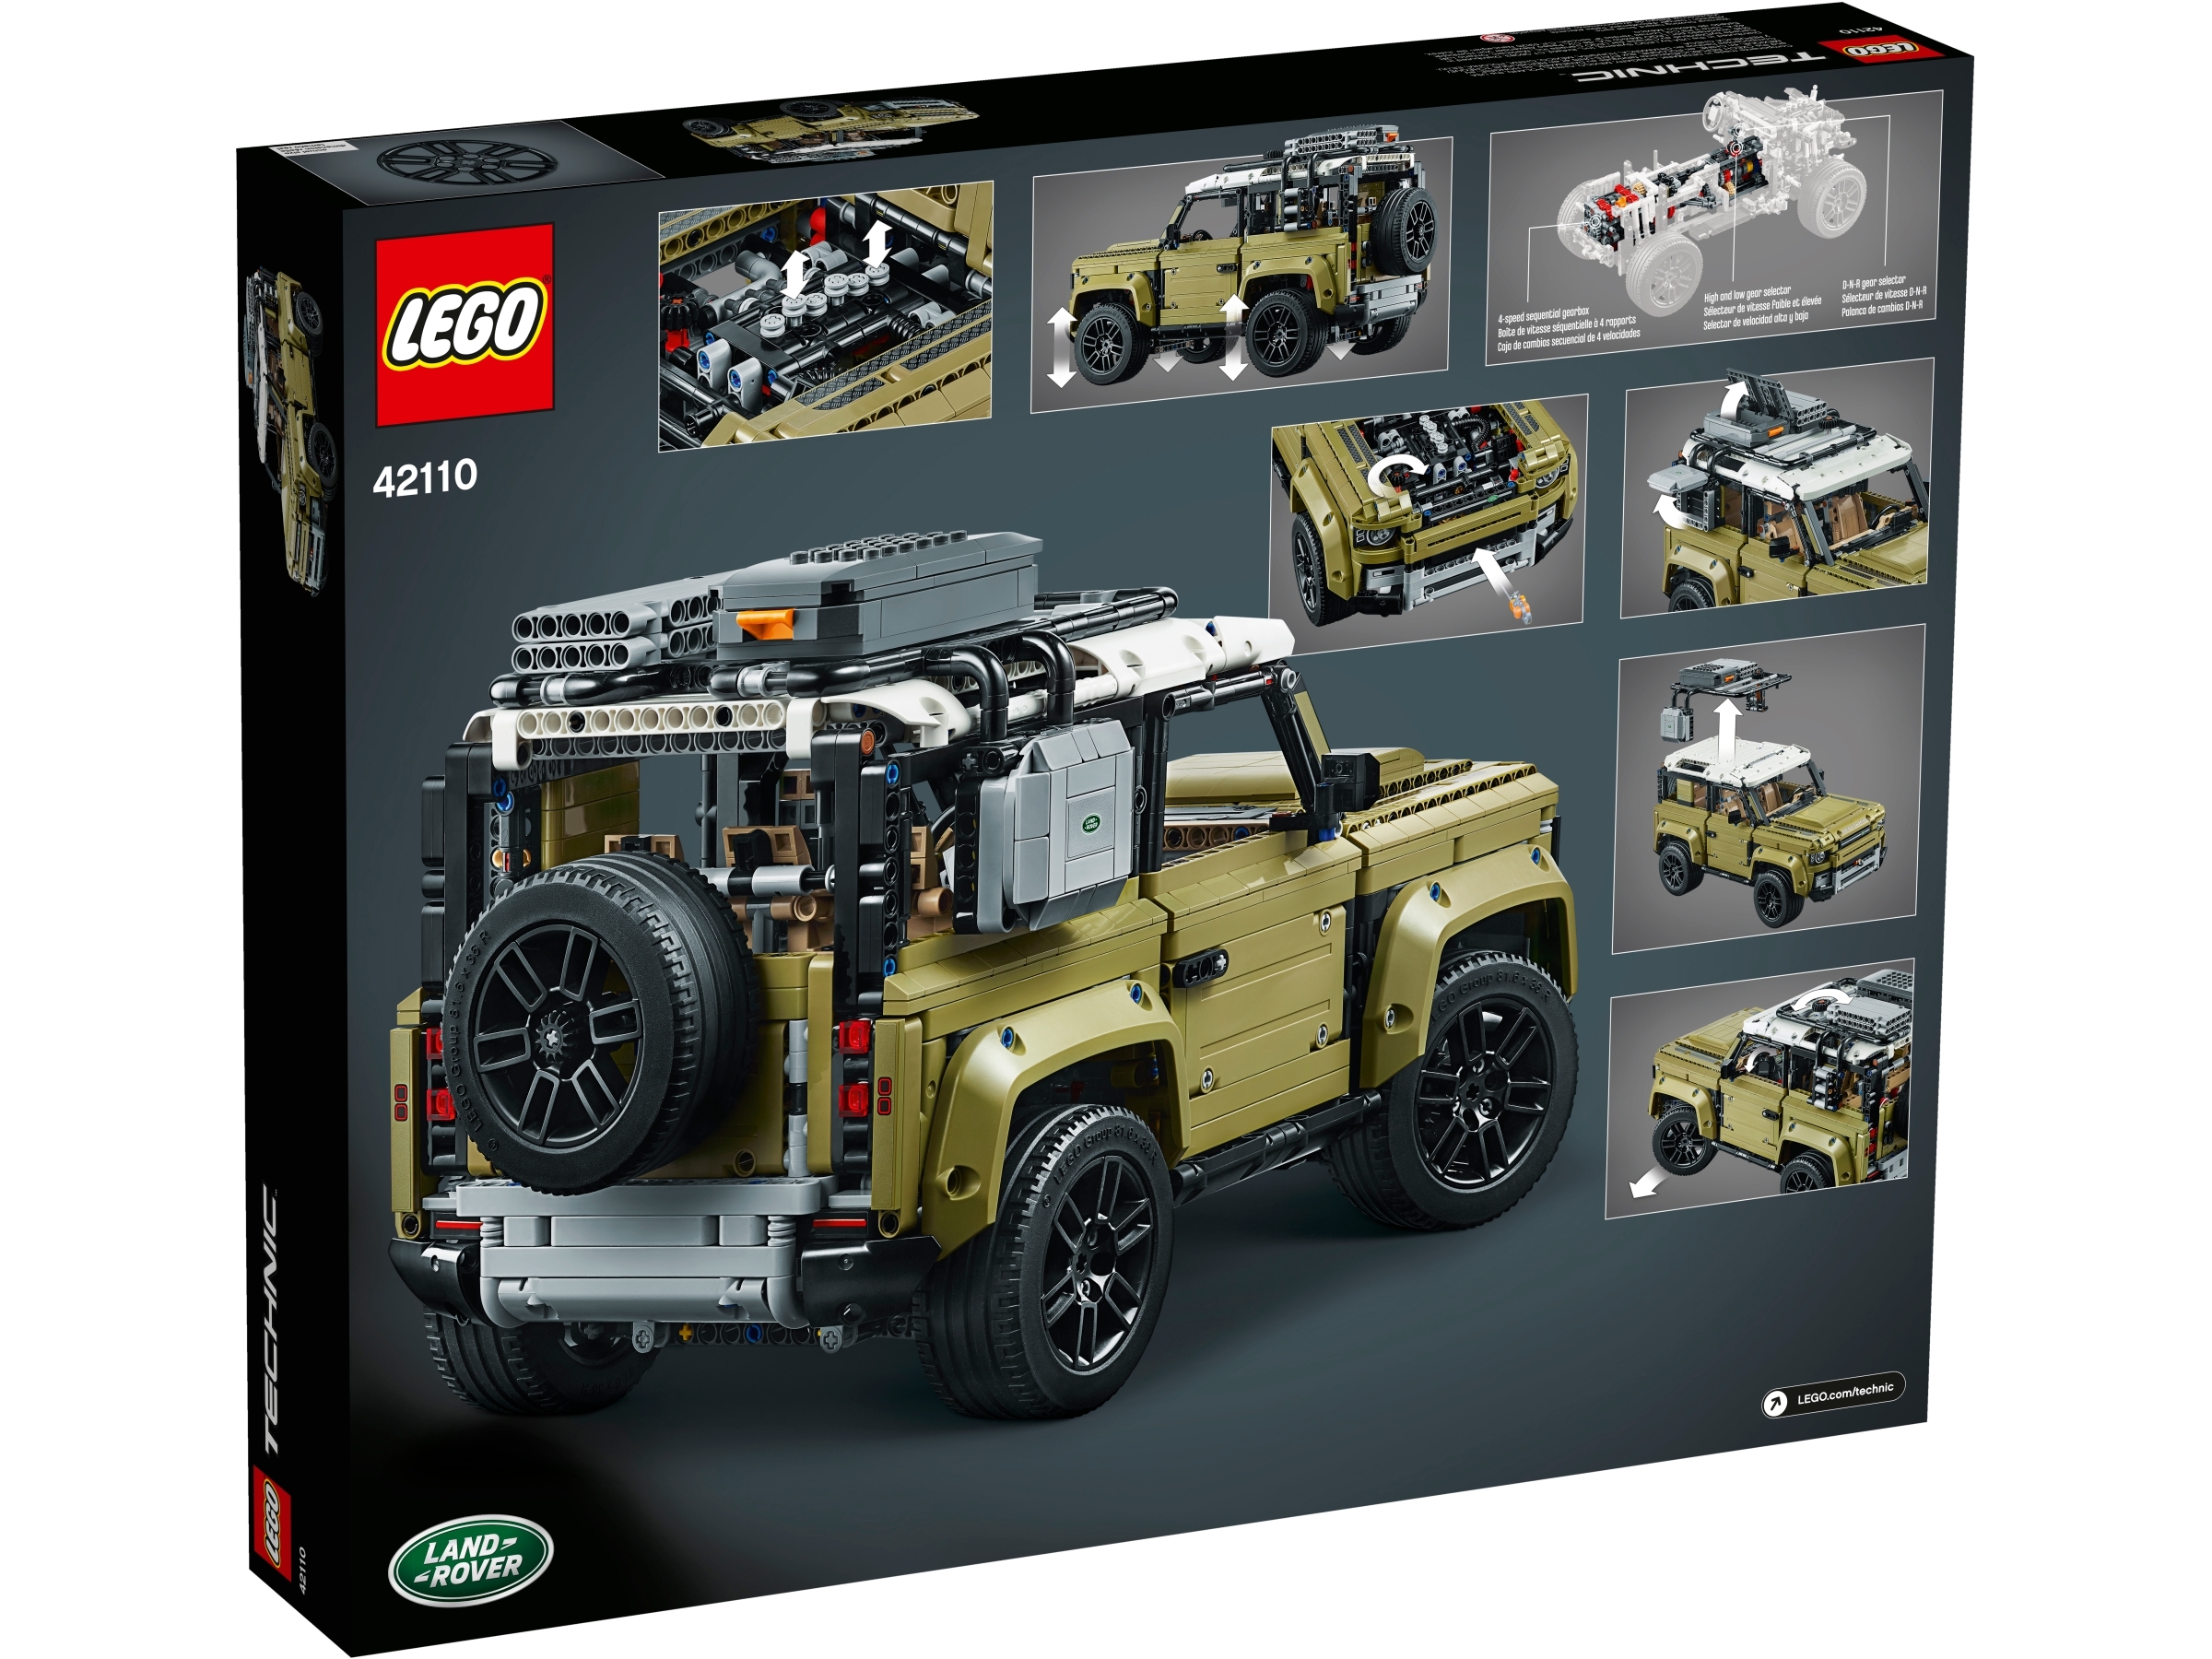 LEGO Technic 42110 Land Rover Defender pas cher - Lego - Achat moins cher